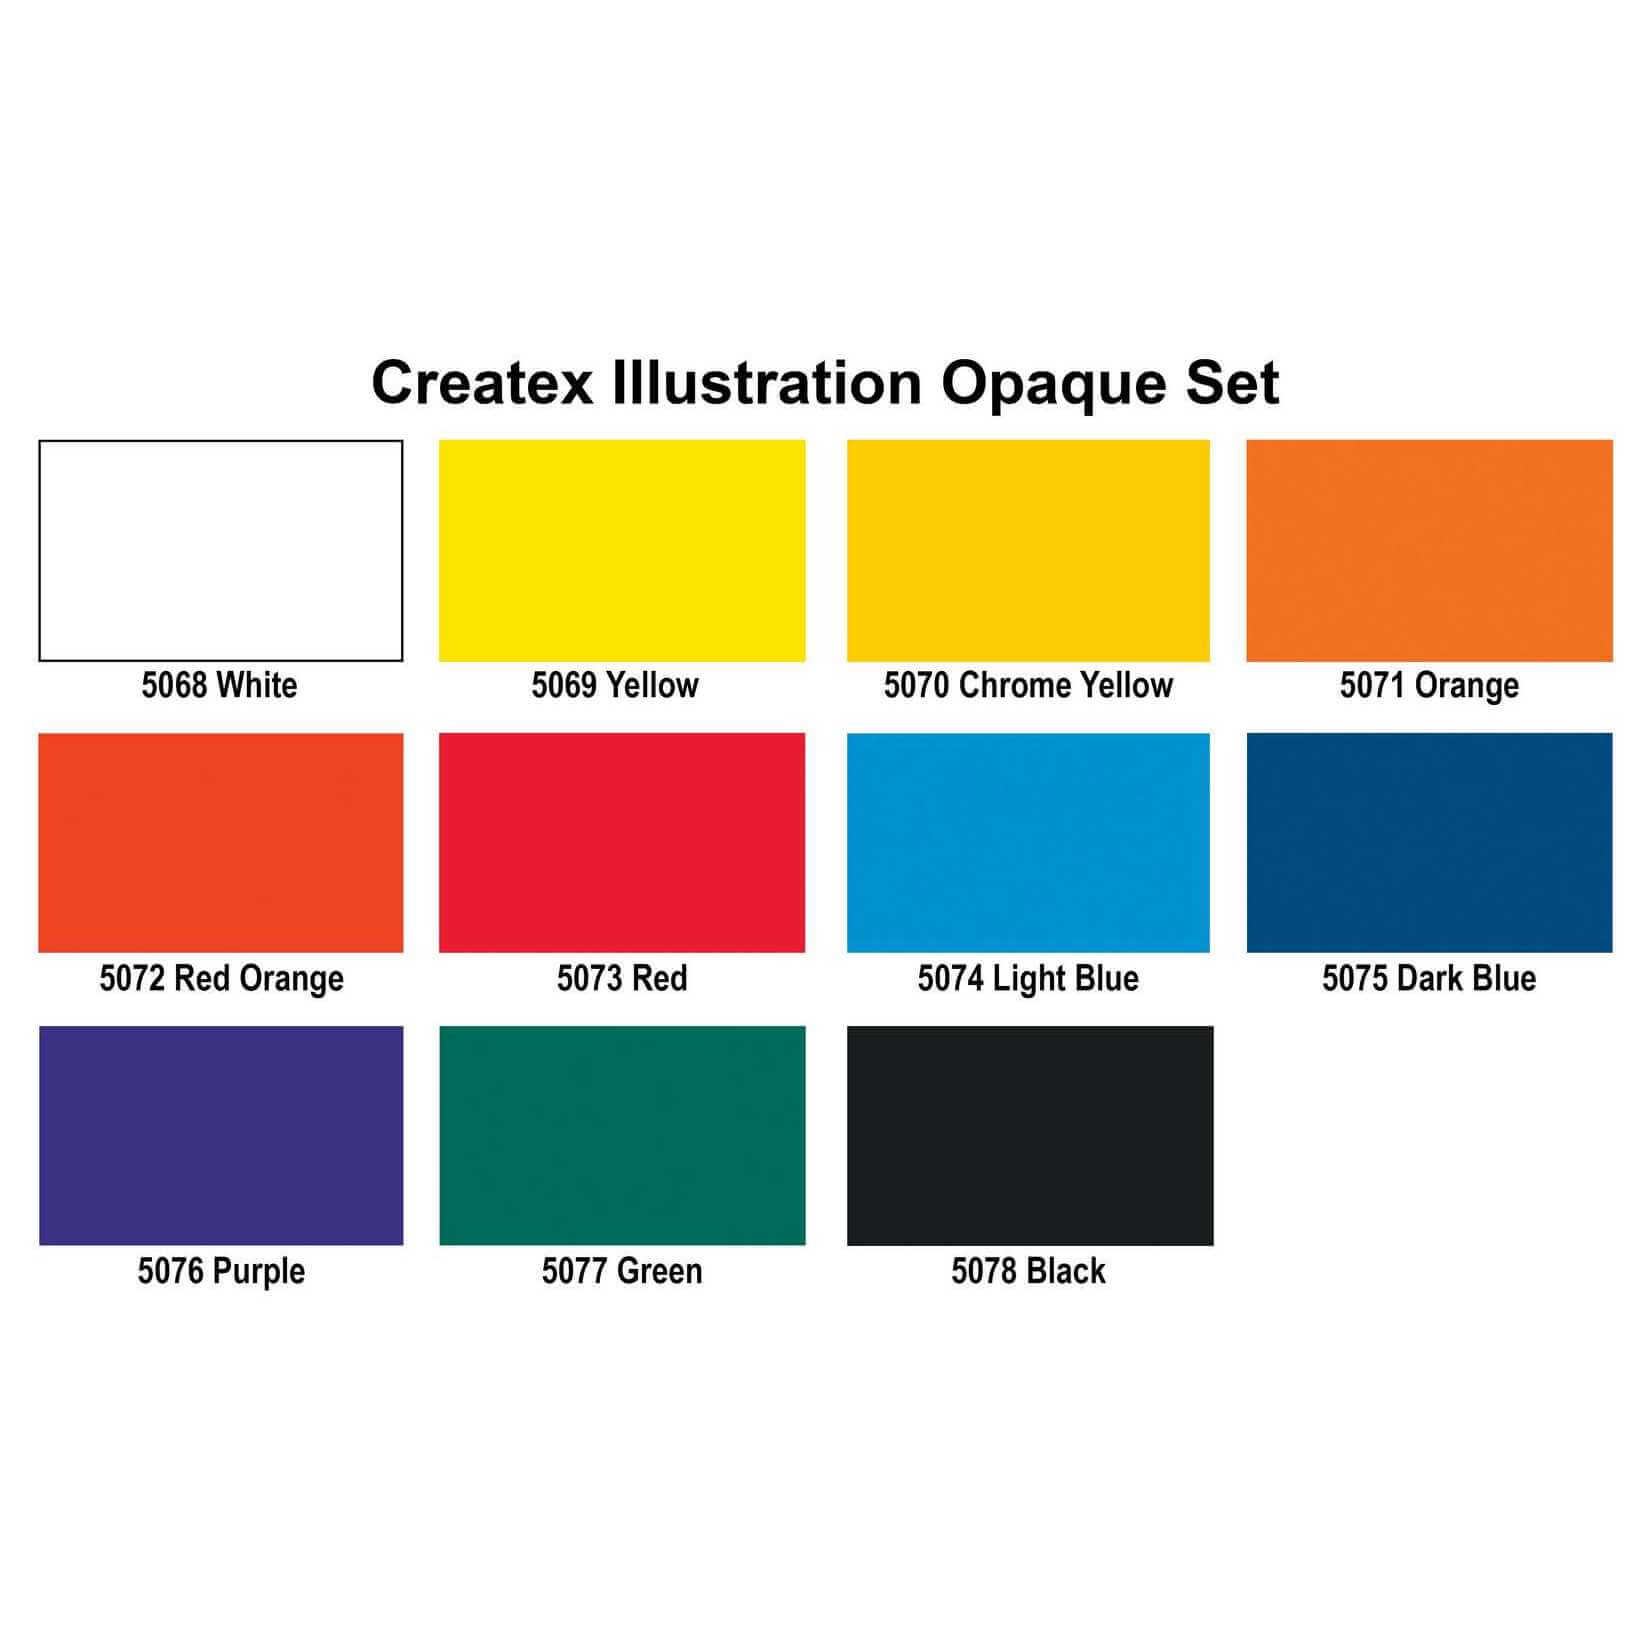 5813-01 Createx 18 Airbrush Color Paint Set